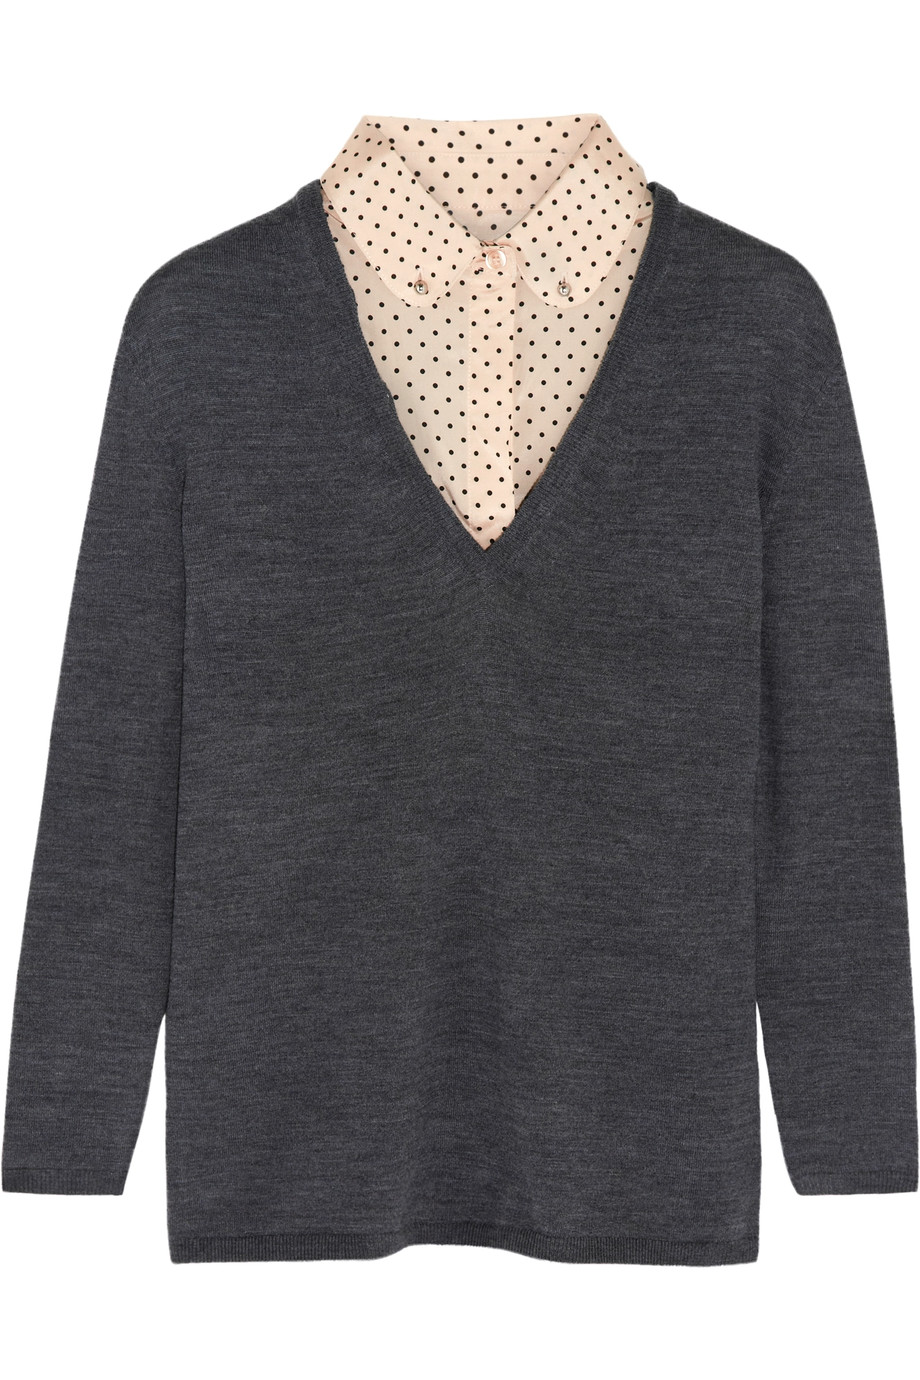 Tory Burch Lacey Stretch Silk-trimmed Merino Wool Sweater | ModeSens